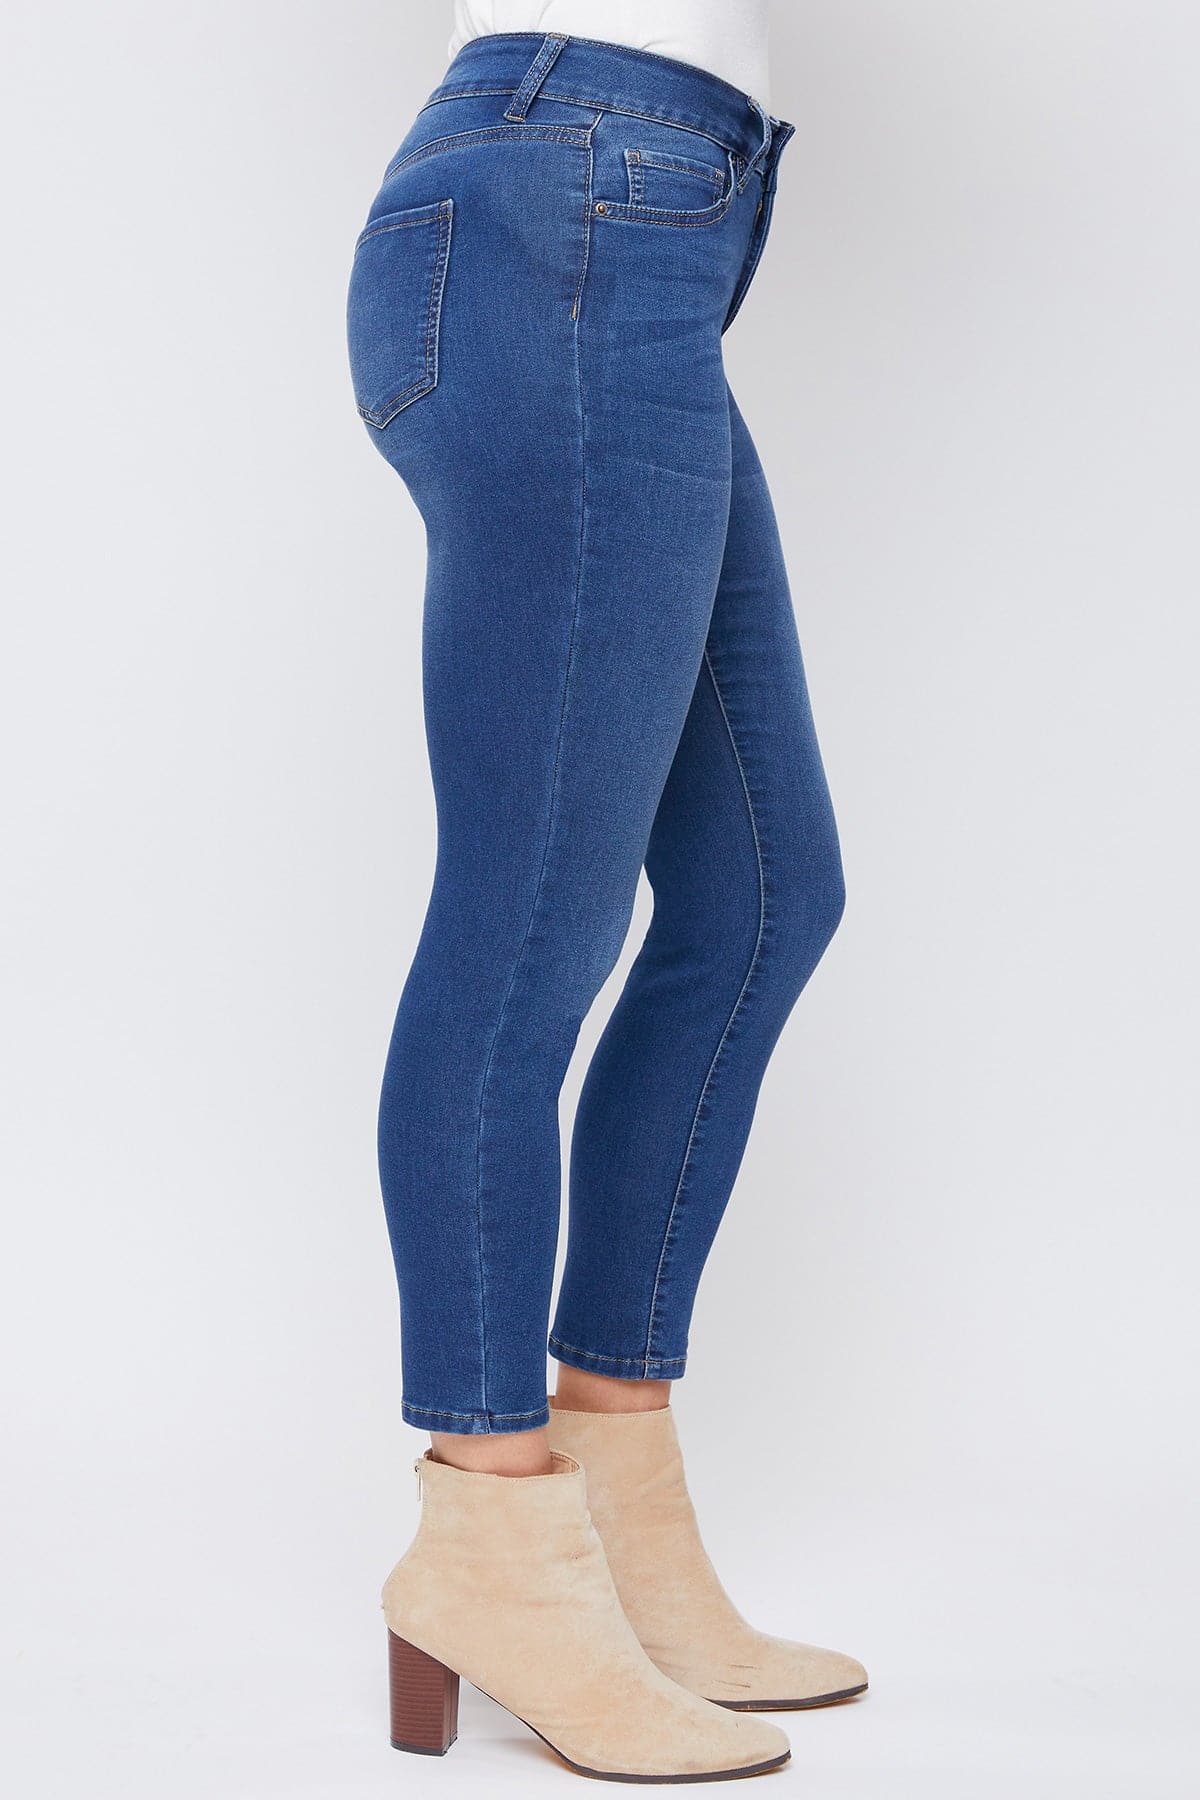 Women's Petite Hyperdenim Super Stretchy Essential Jean